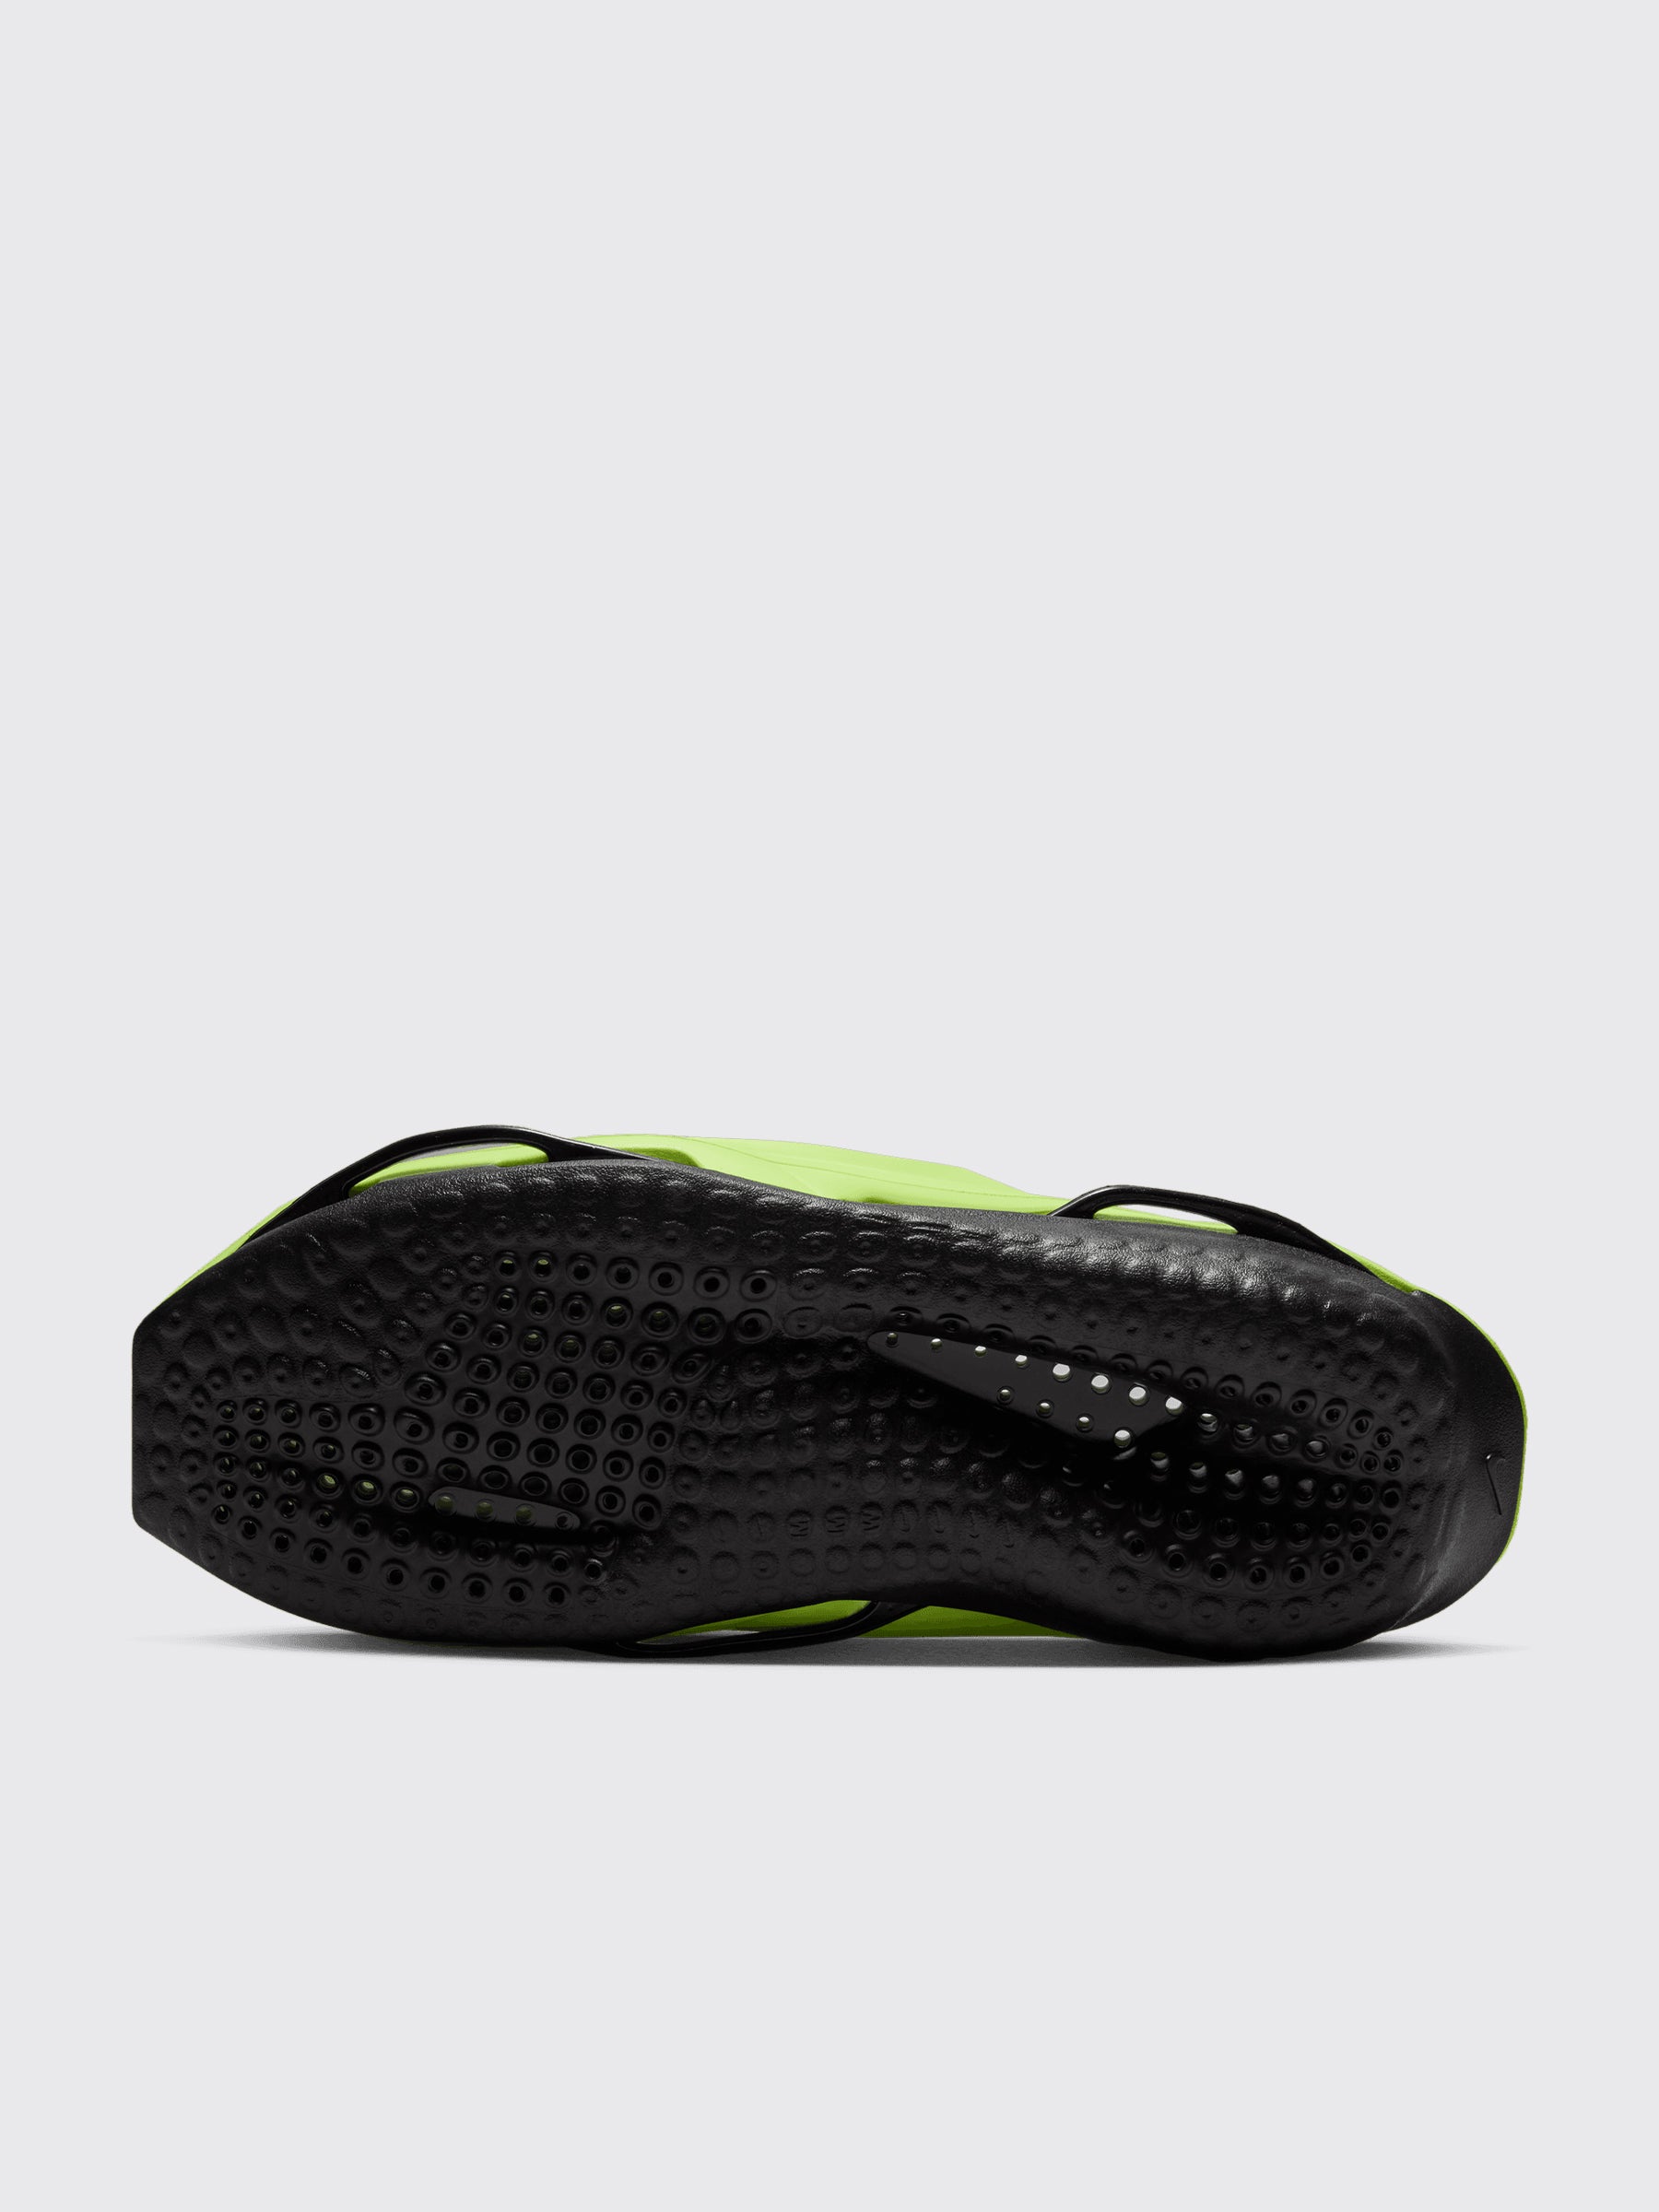 Nike x MMW 005 Slide Volt / Black